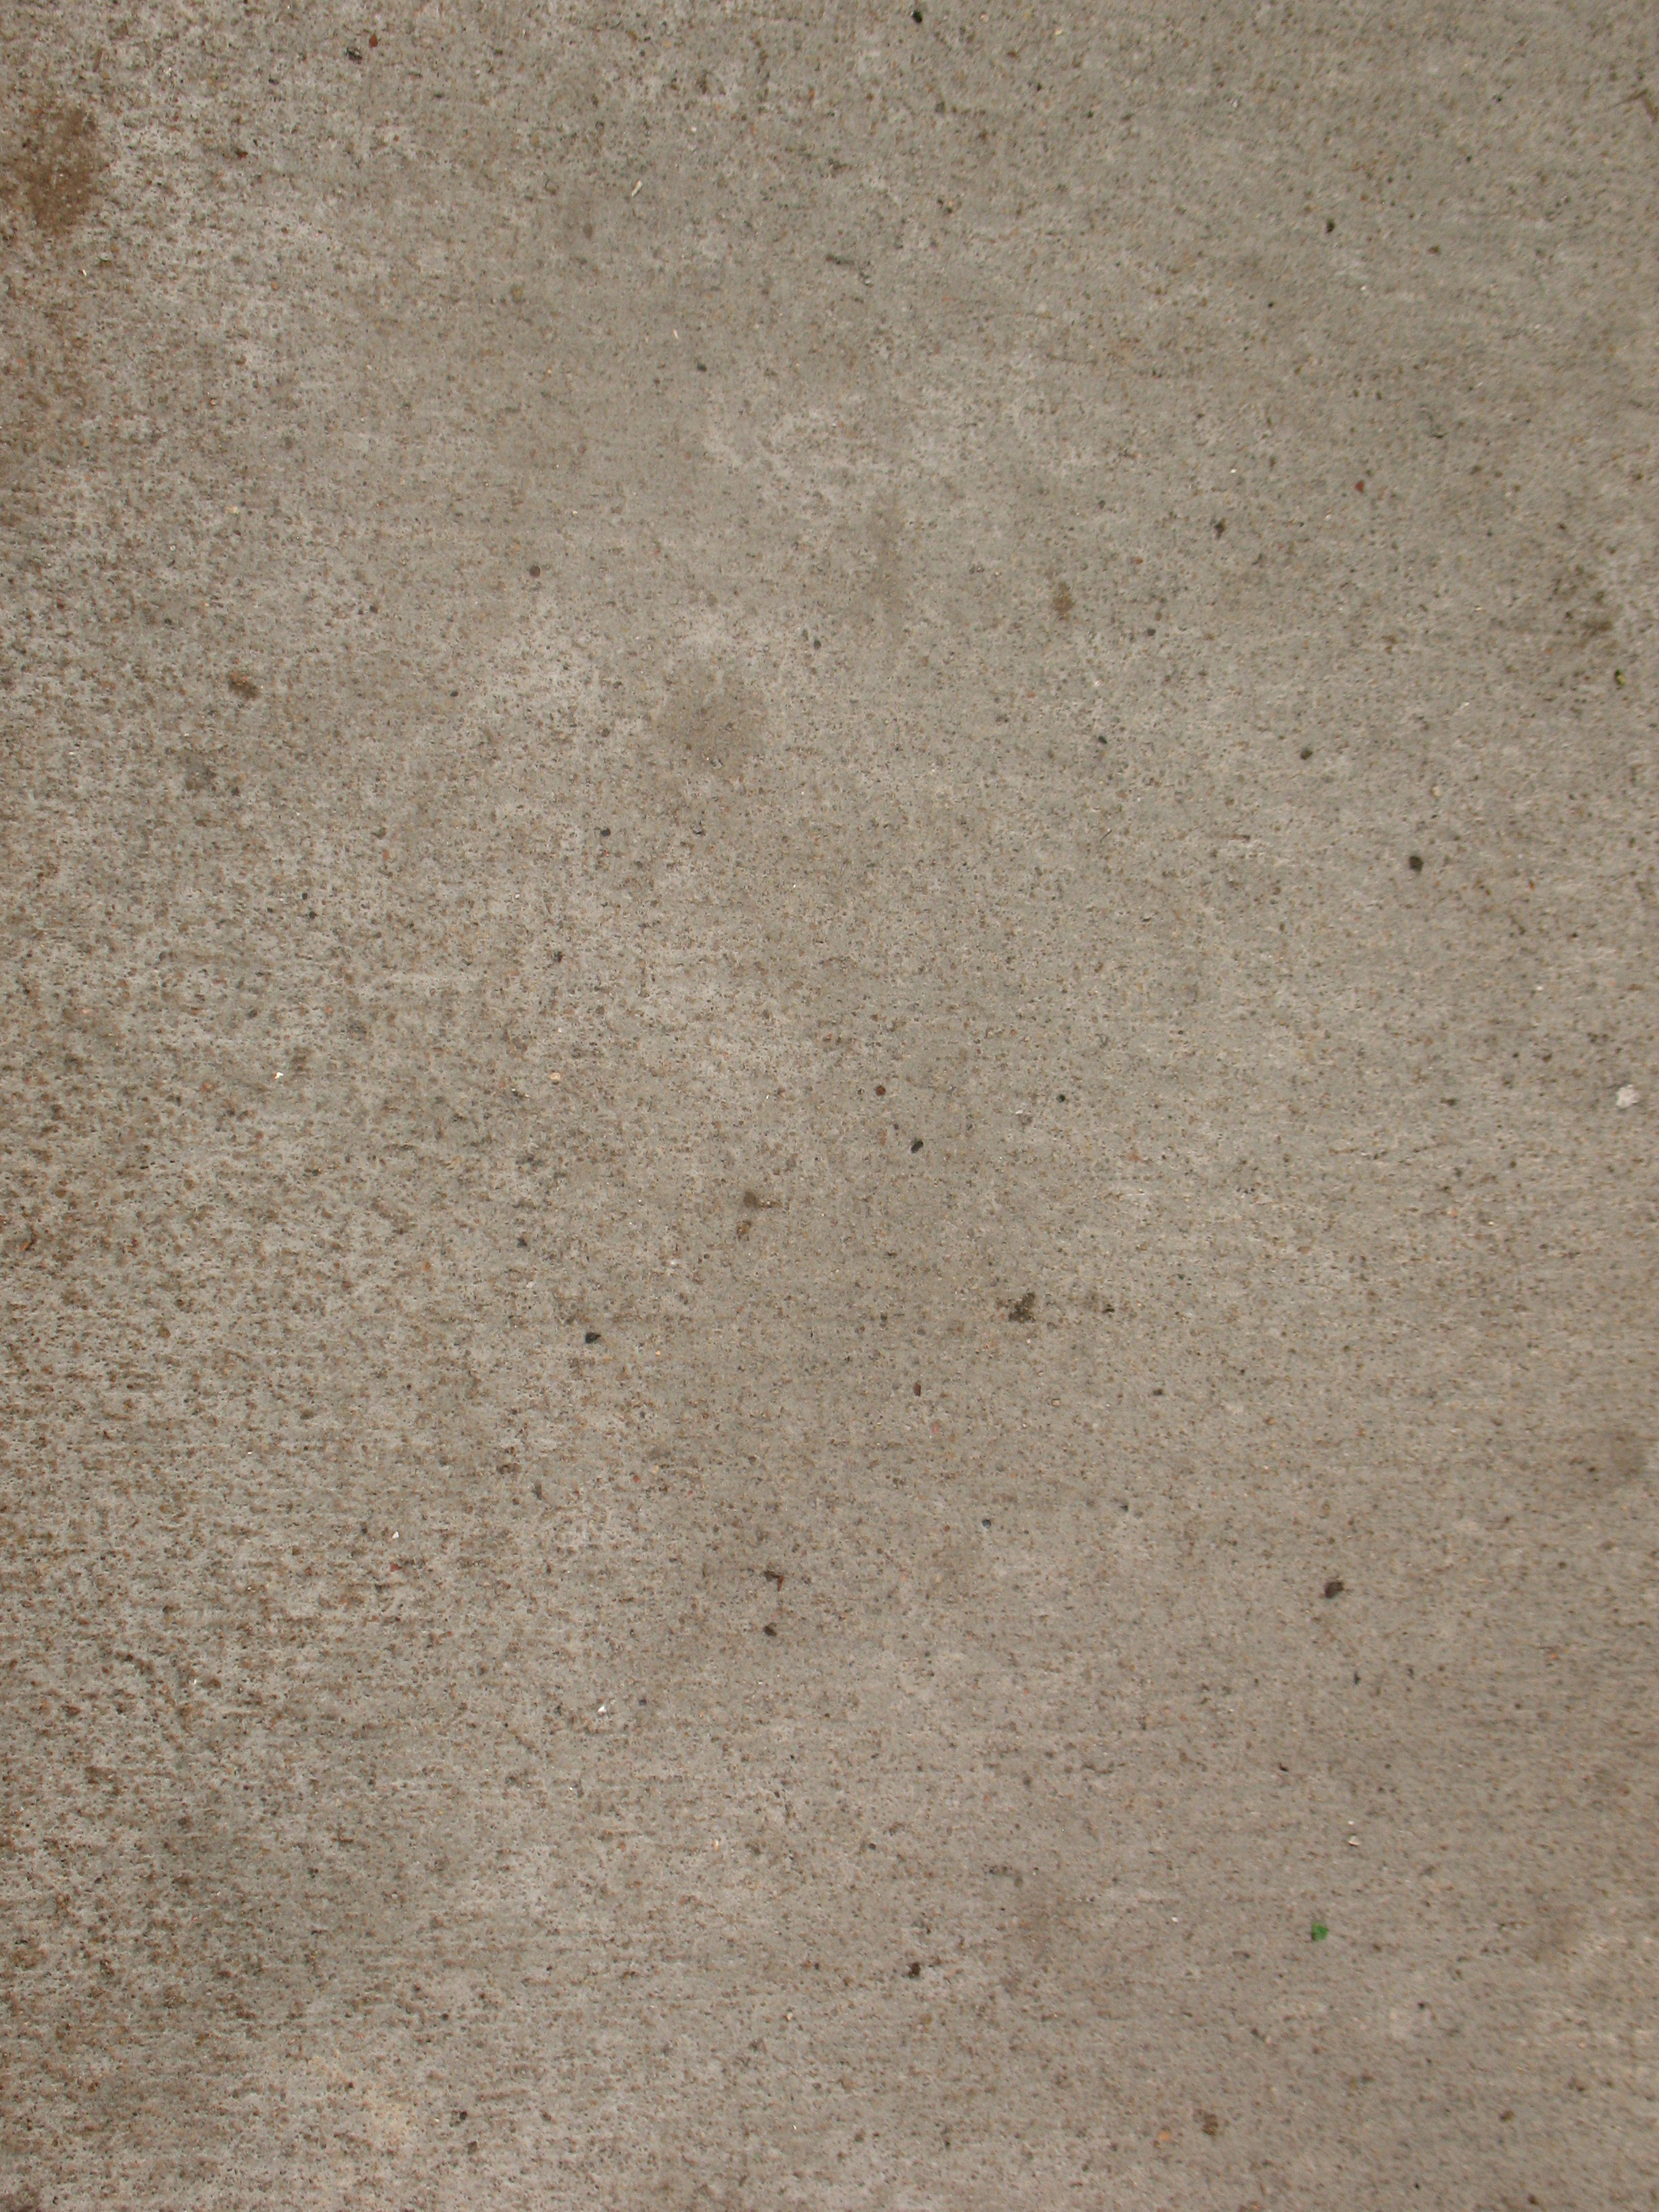 Tan concrete texture photo